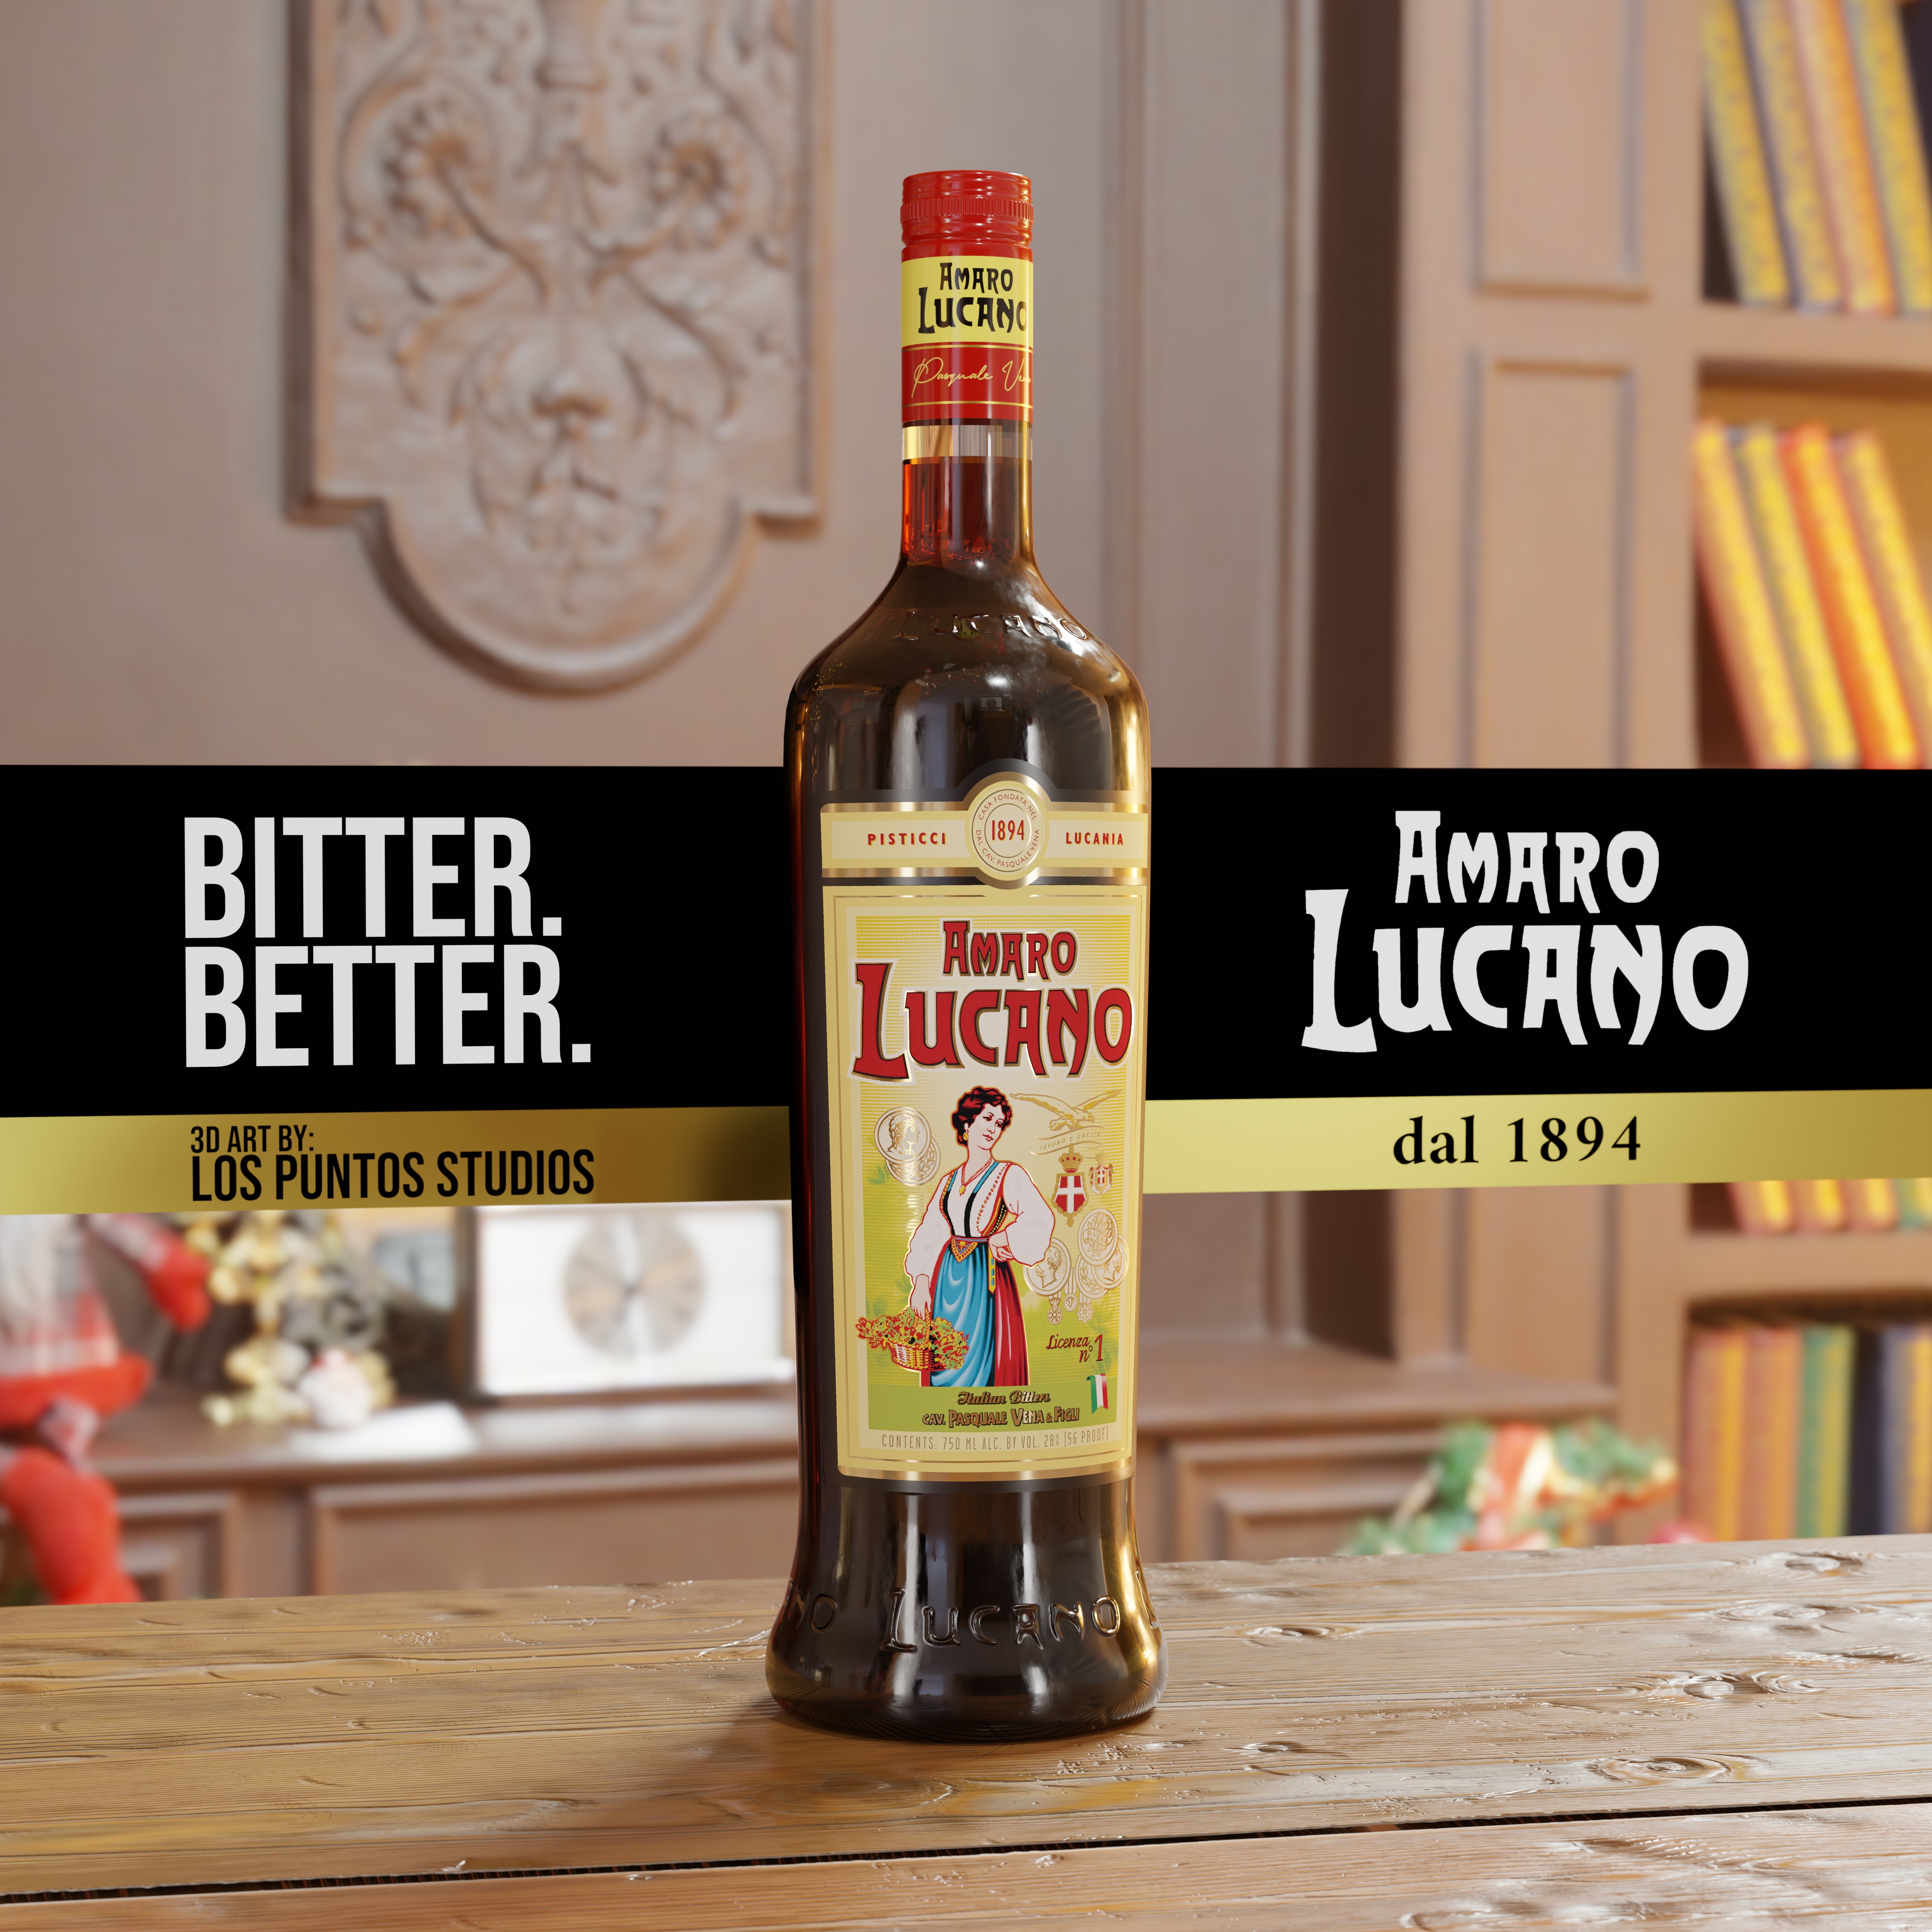 La Bottiglia di Amaro Lucano - Finished Projects - Blender Artists  Community